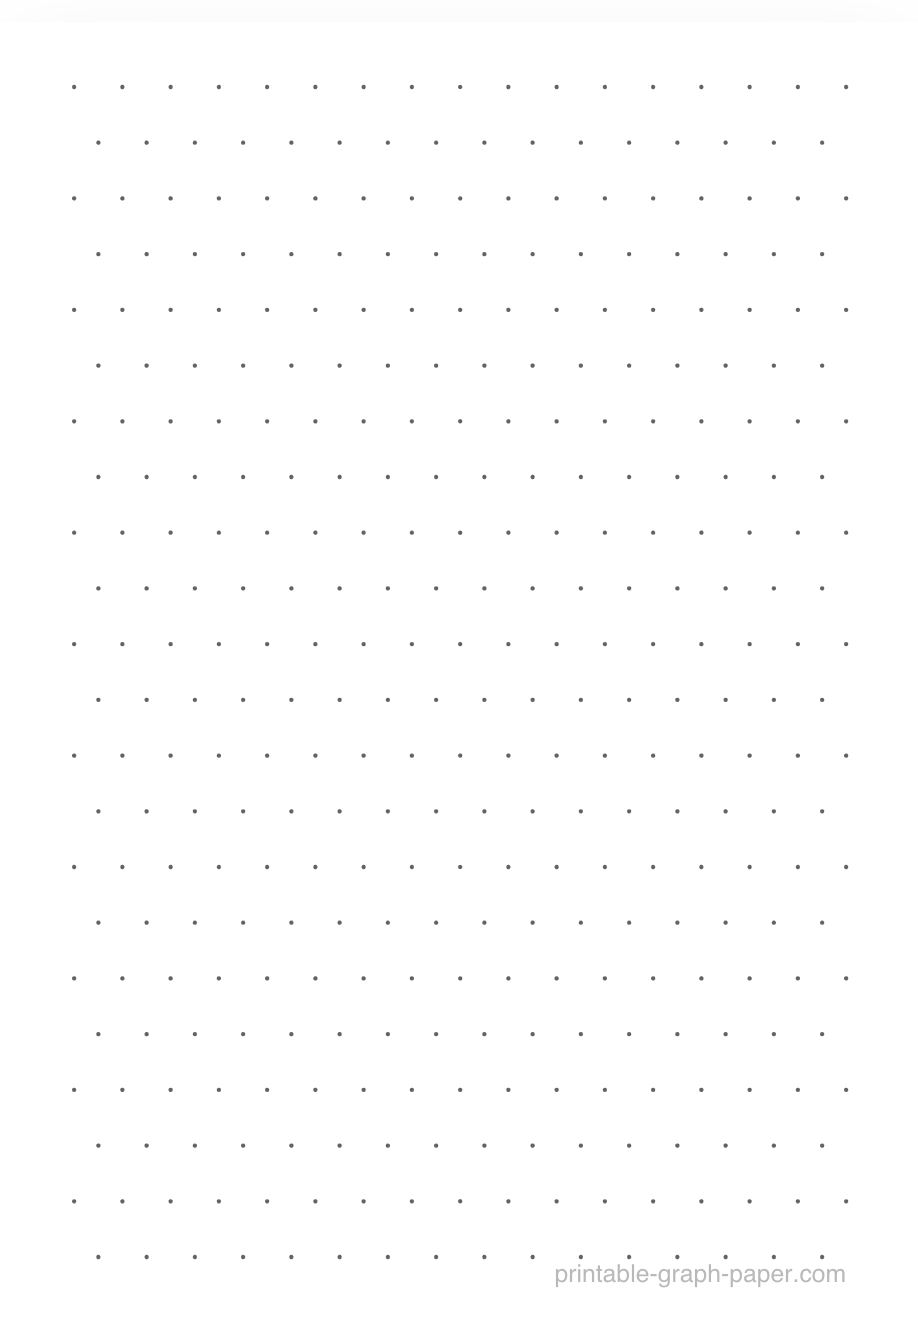 1/4" printable isometric-dot paper